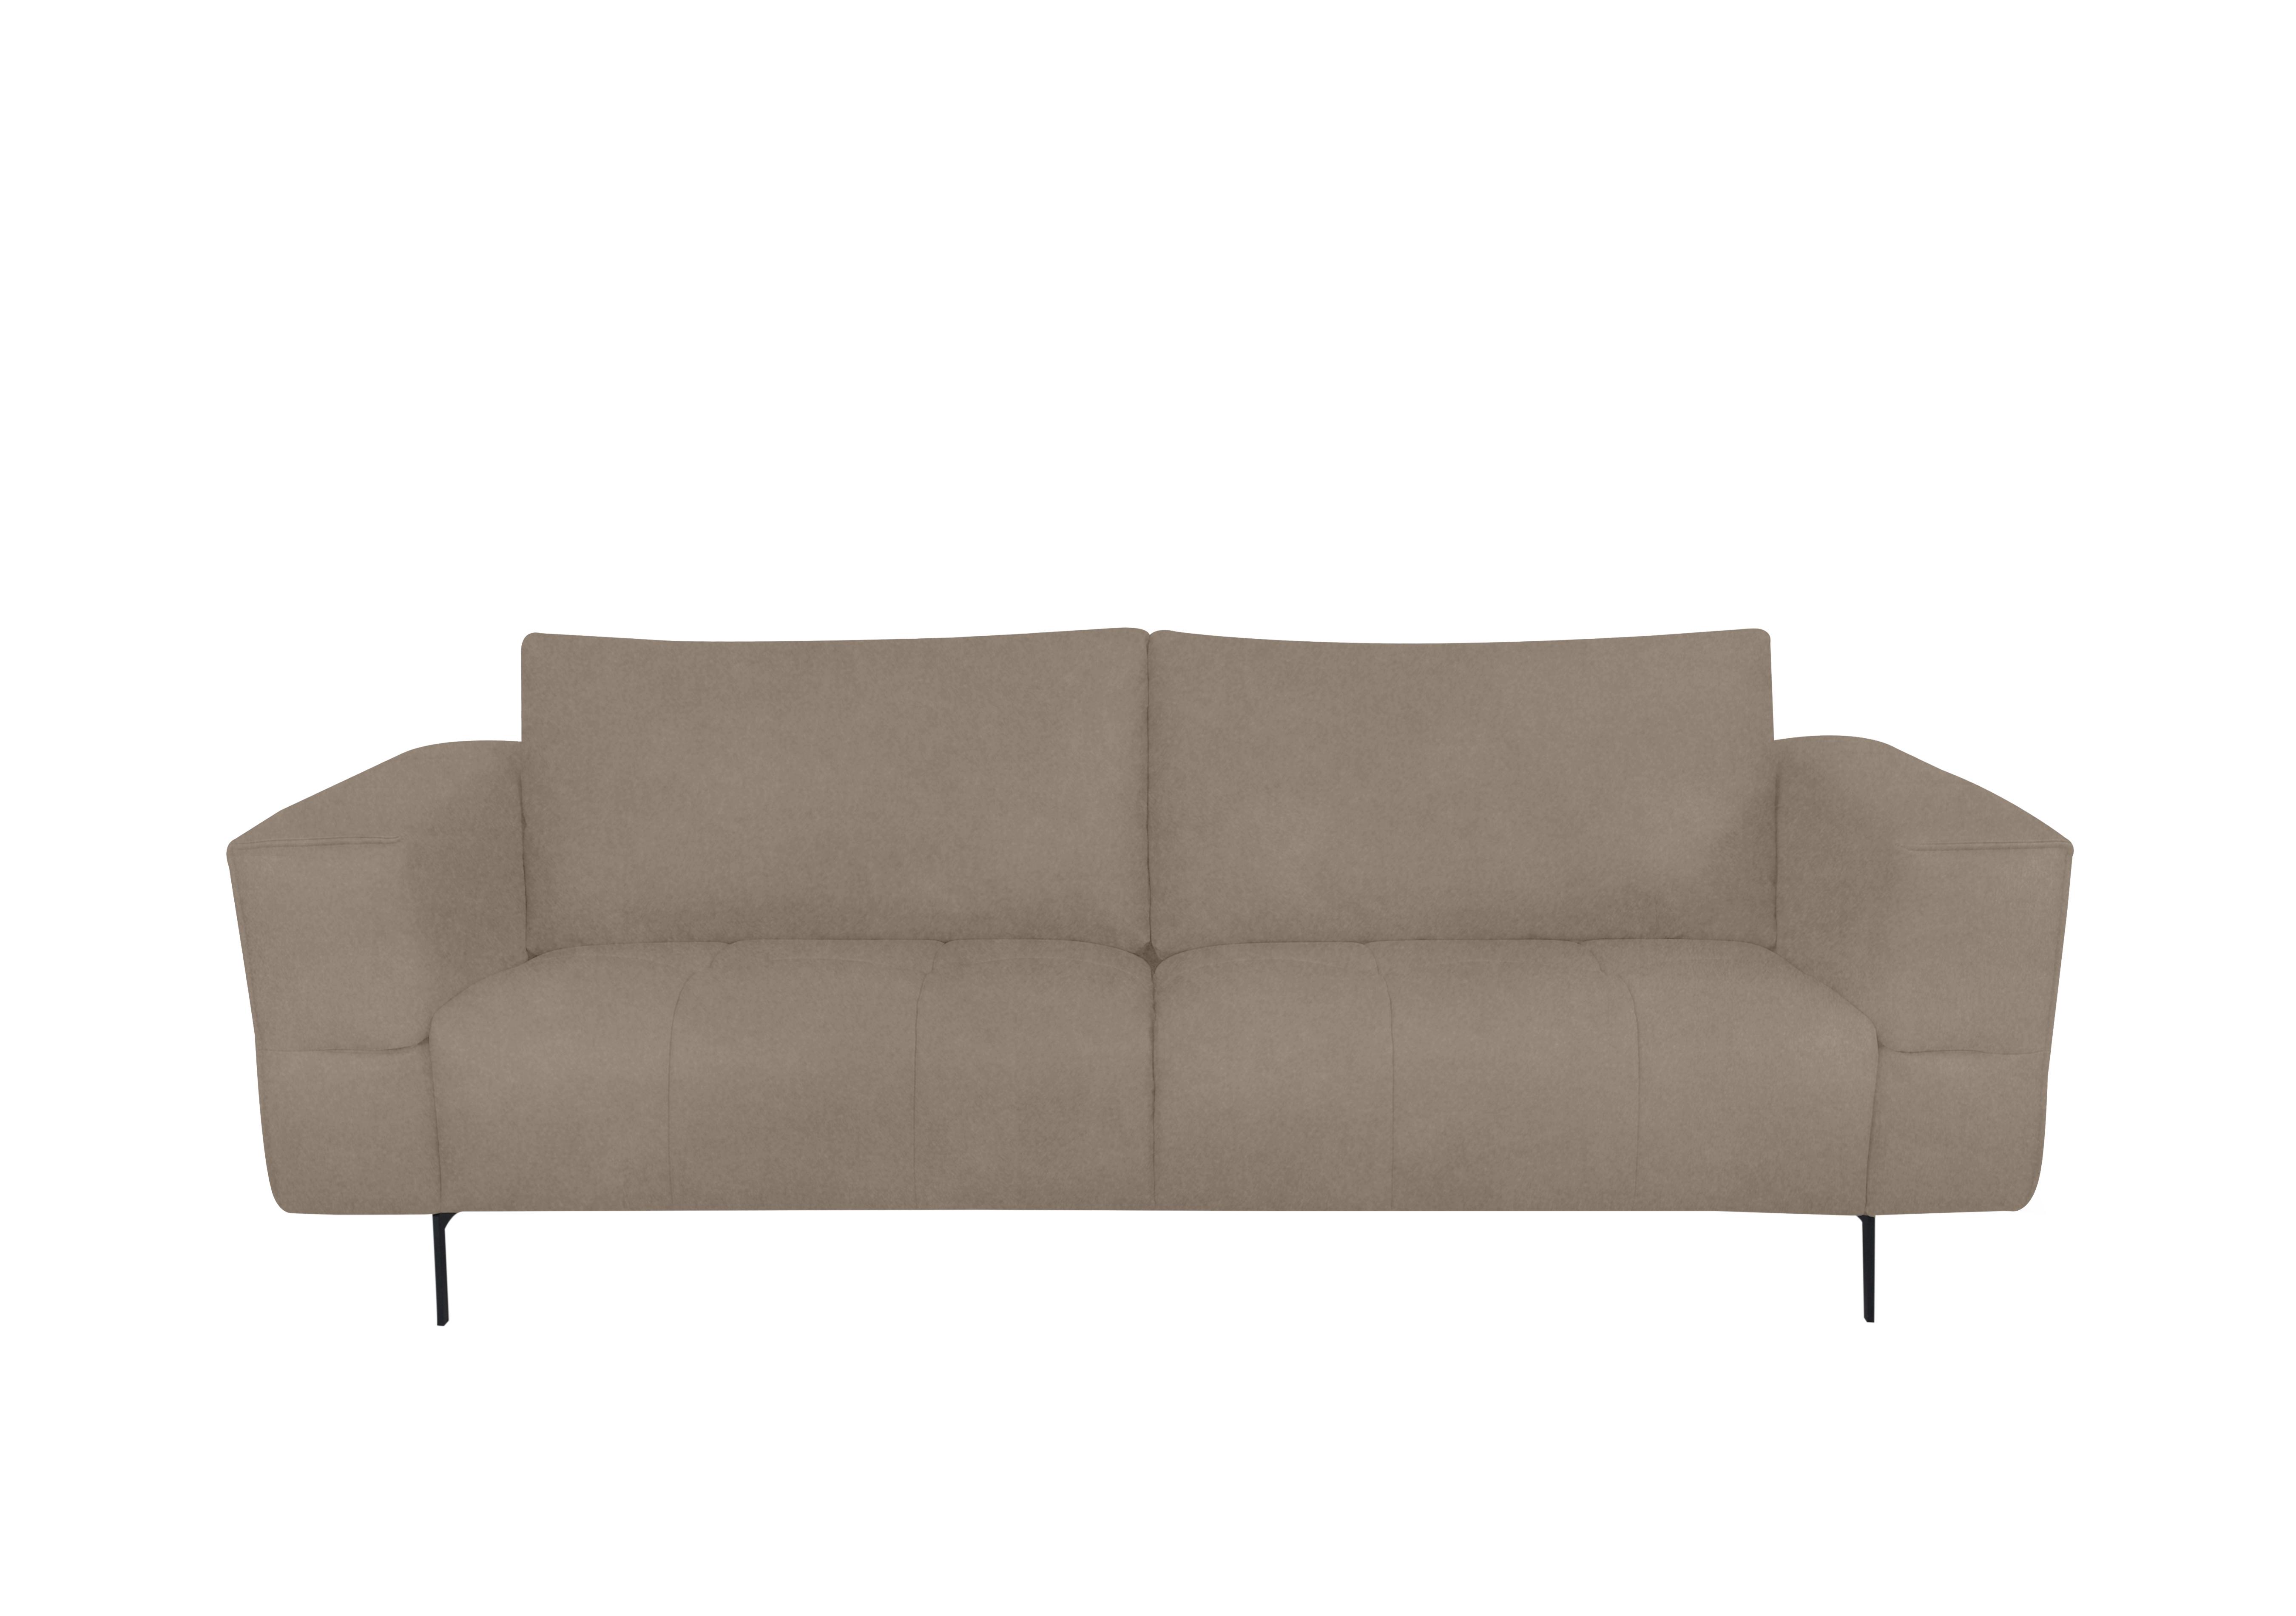 Lawson 3 Seater Fabric Sofa in Fab-Meg-R32 Light Khaki on Furniture Village